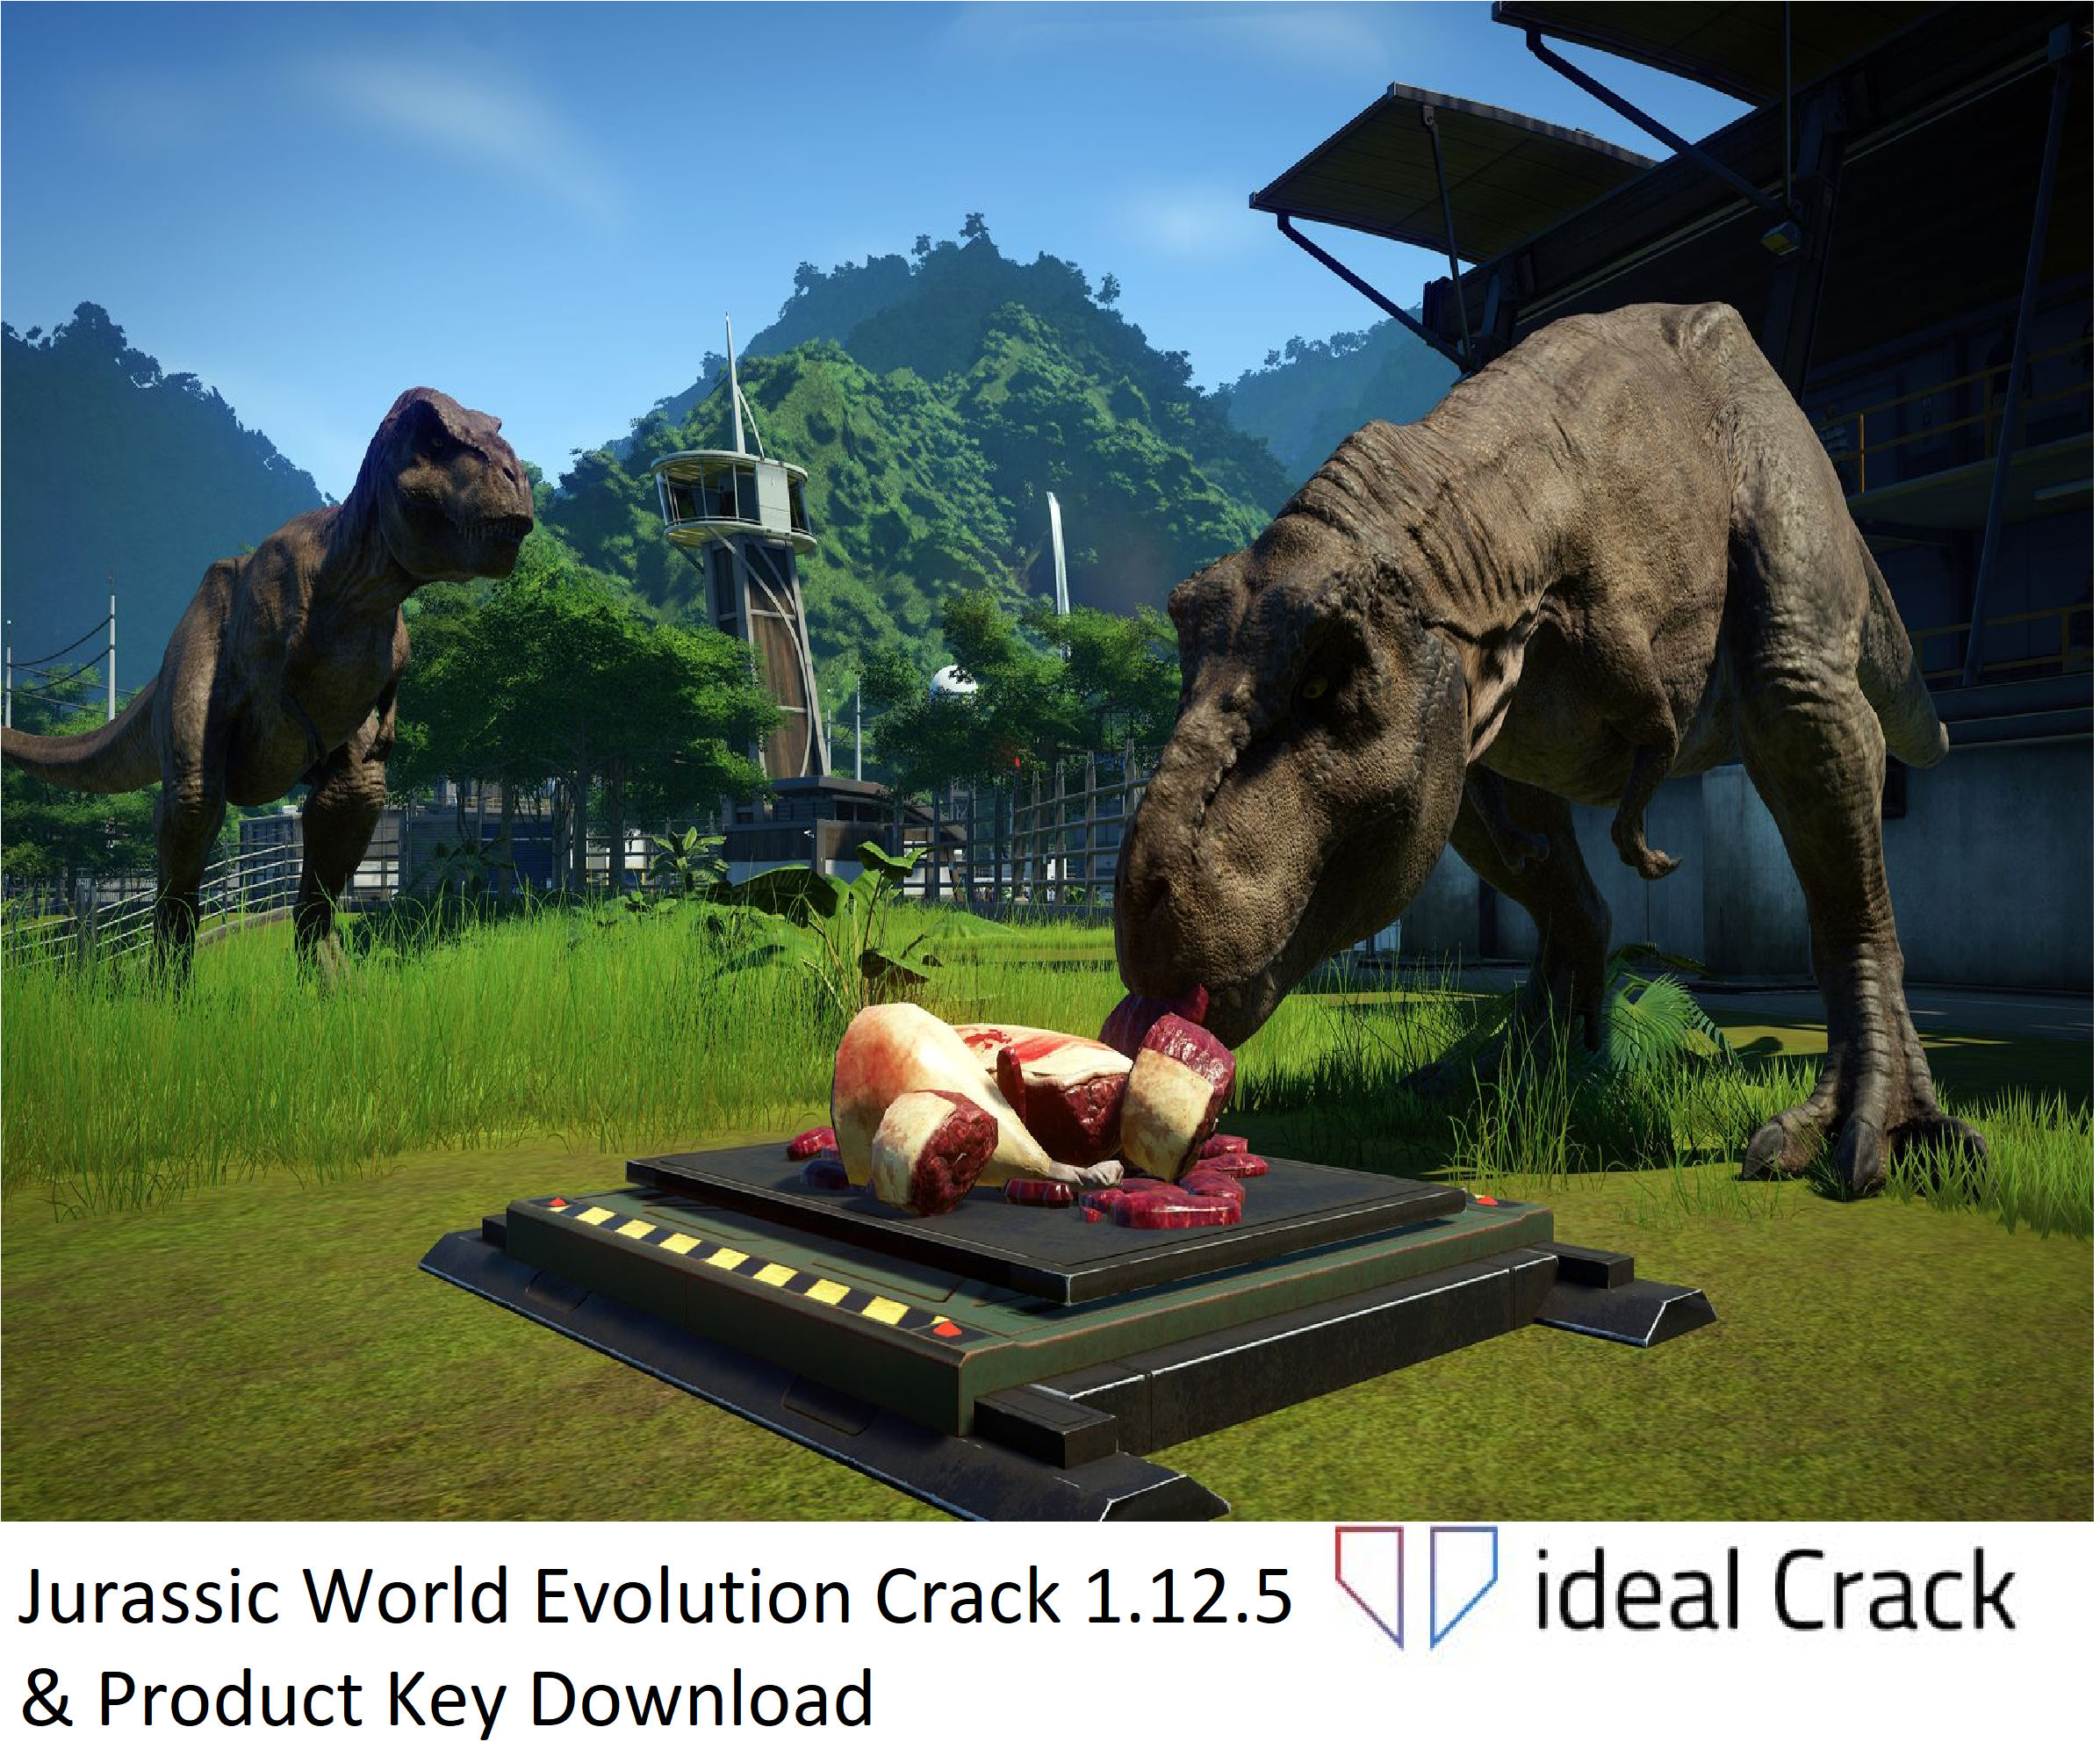 Jurassic World Evolution Crack 1.12.5 & Product Key Download